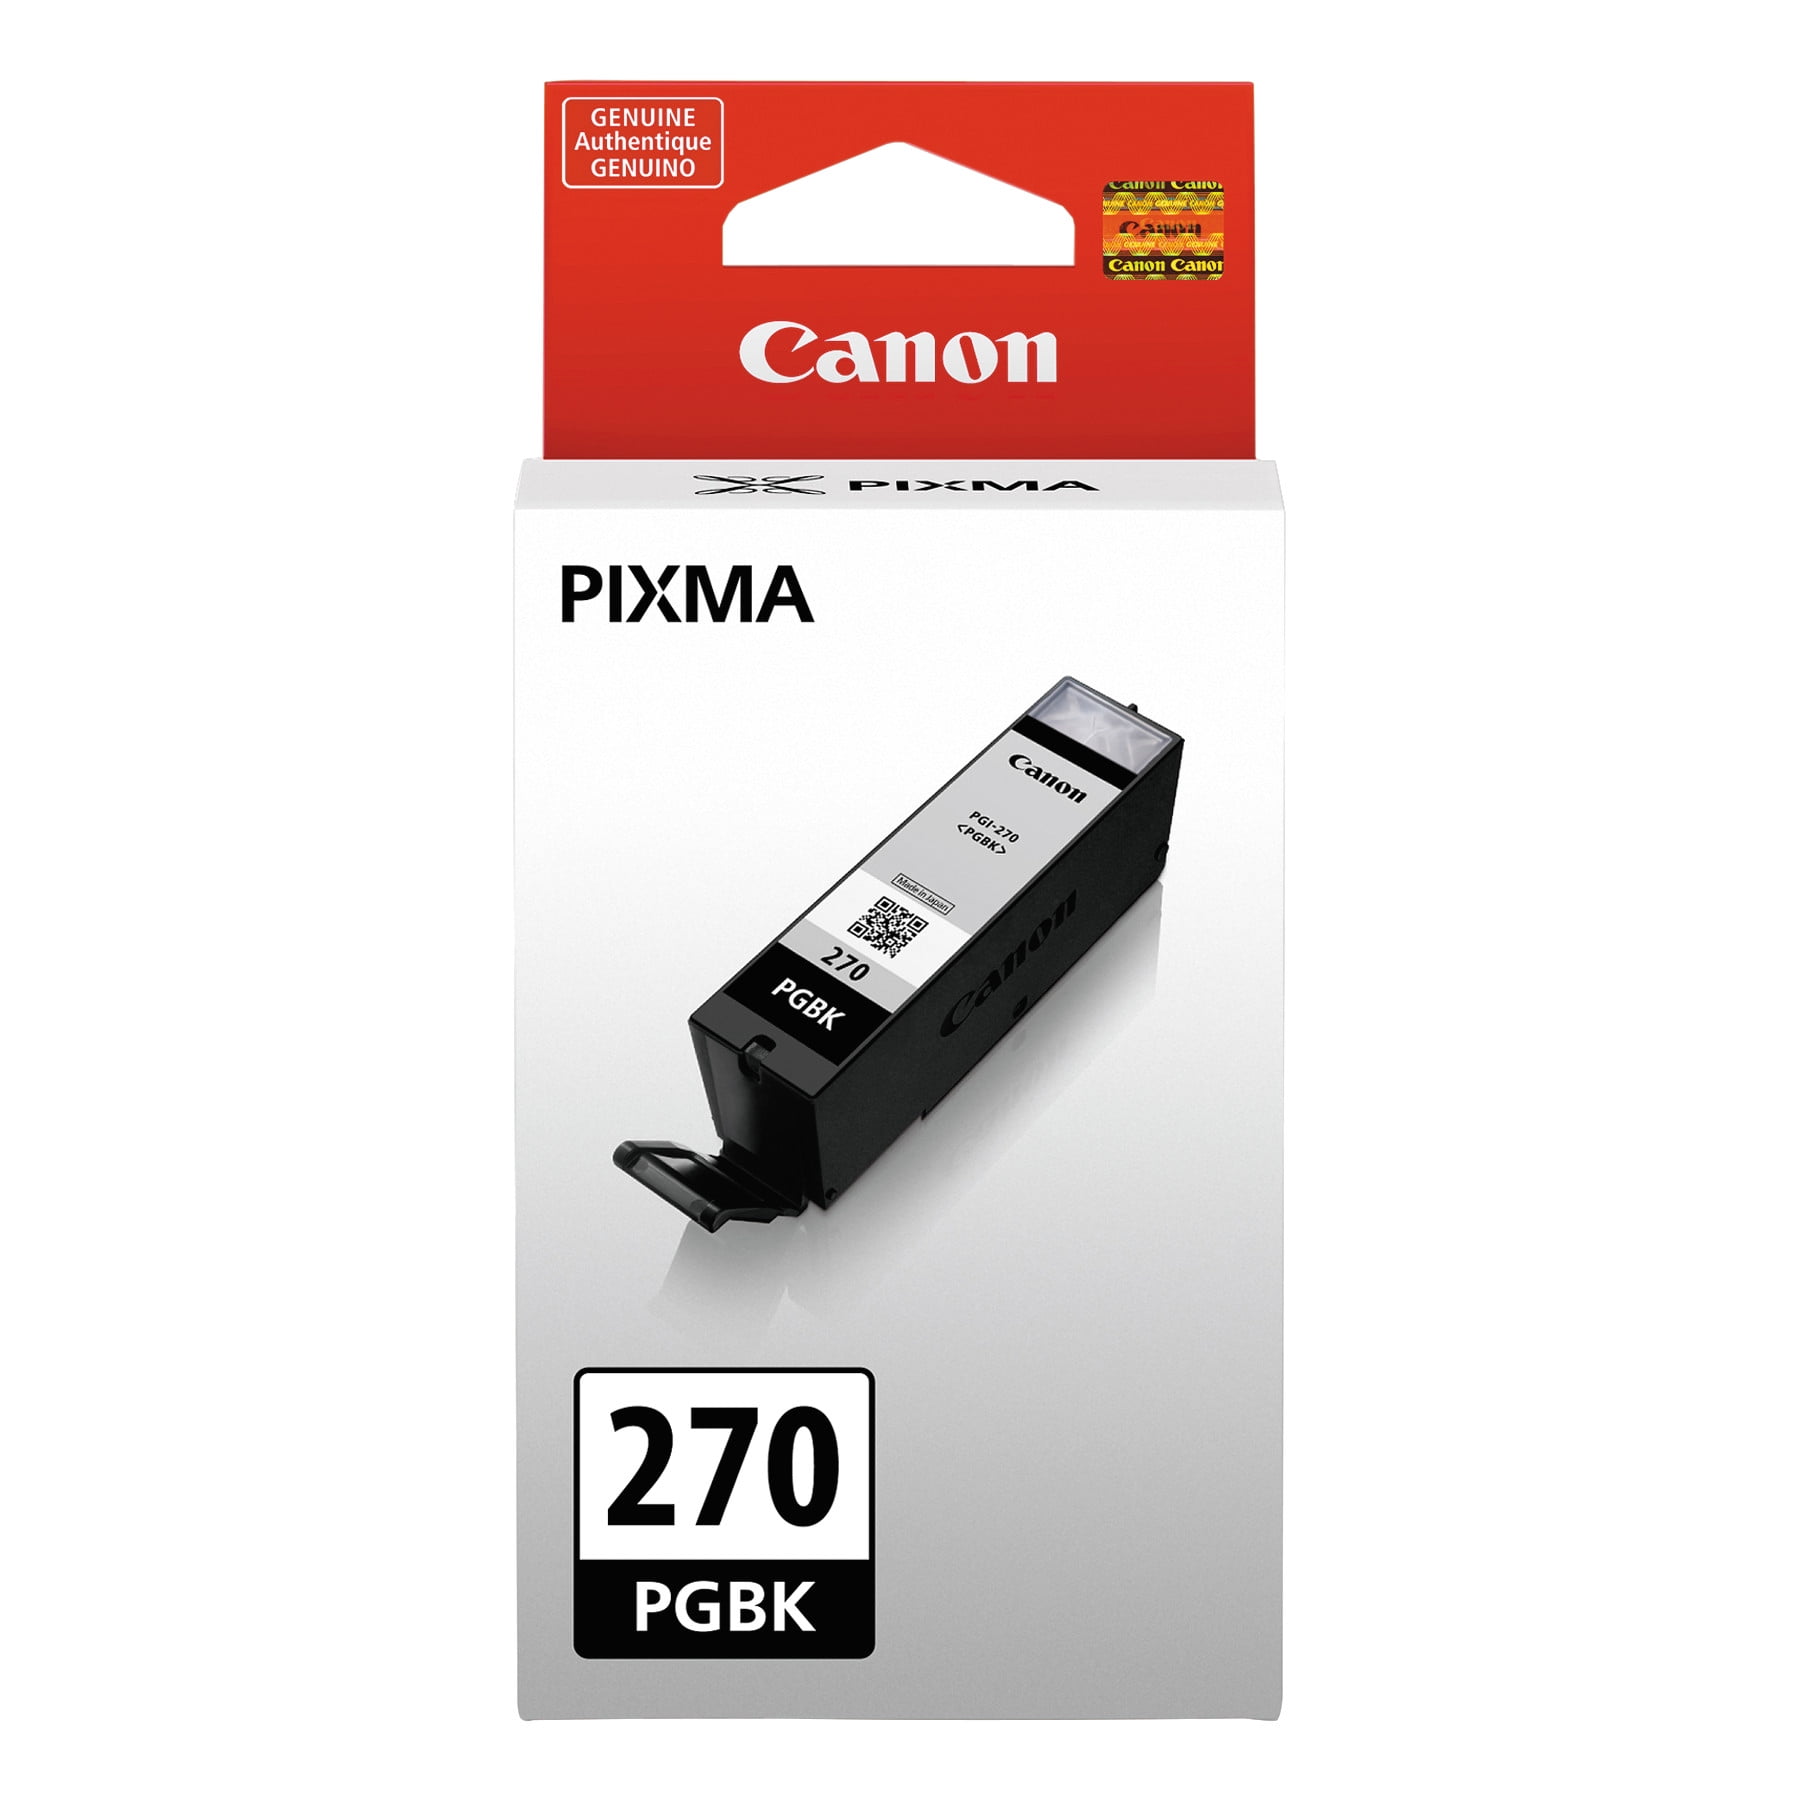 Muldyr Ejeren nødsituation Canon PGI-270 Pigment Black Ink Tank - Walmart.com